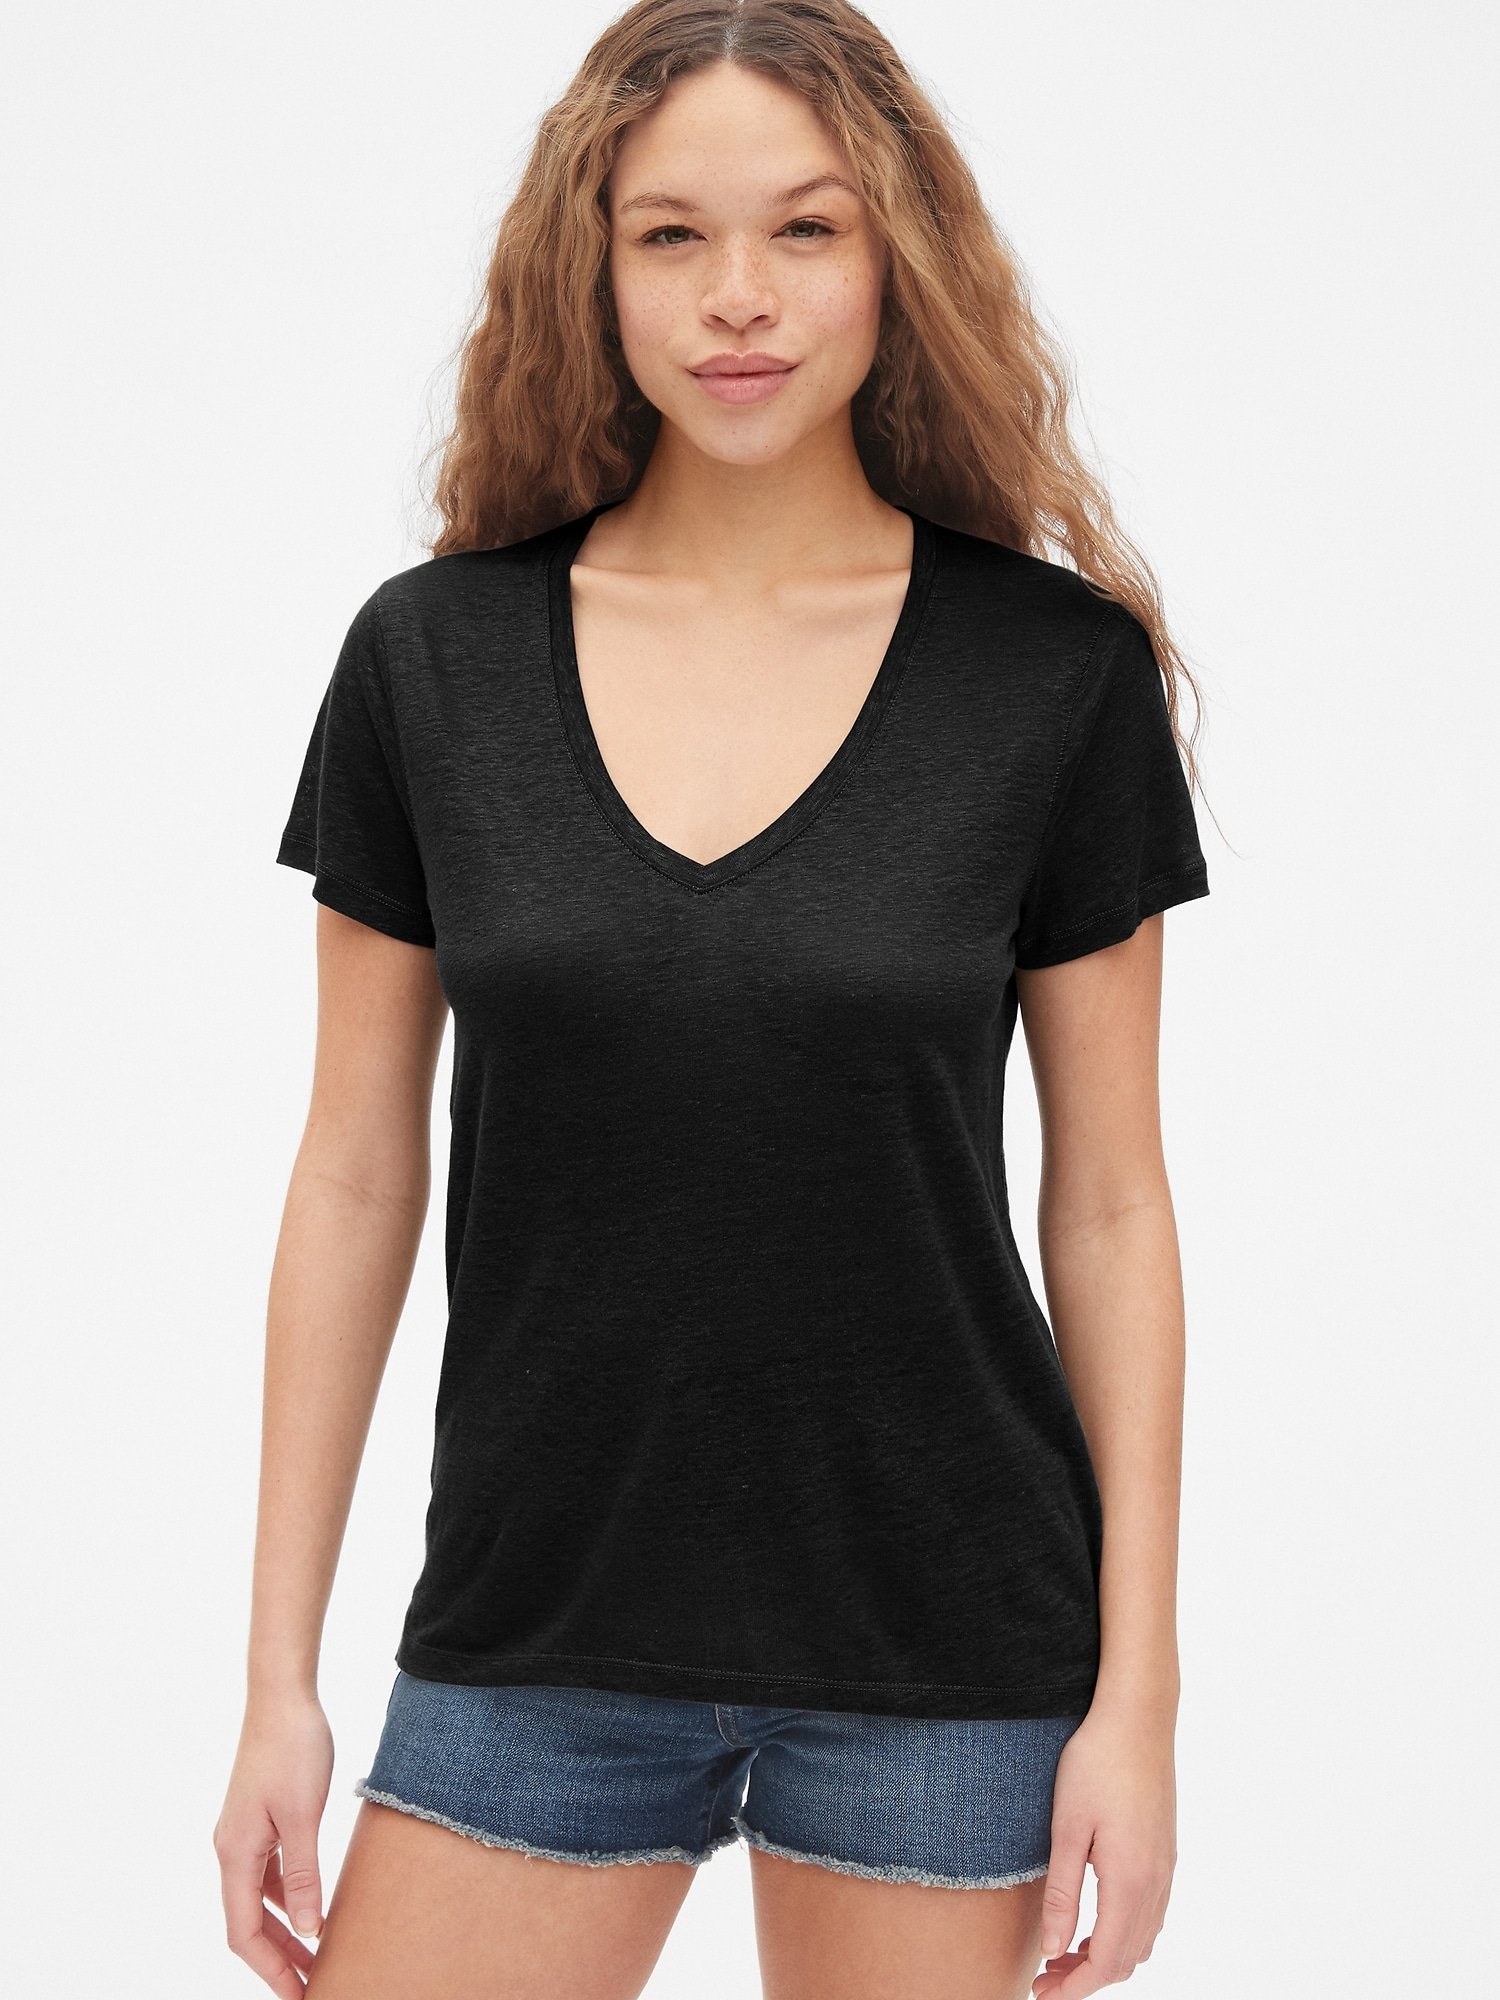 Kadın V-Yaka Keten T-Shirt product image